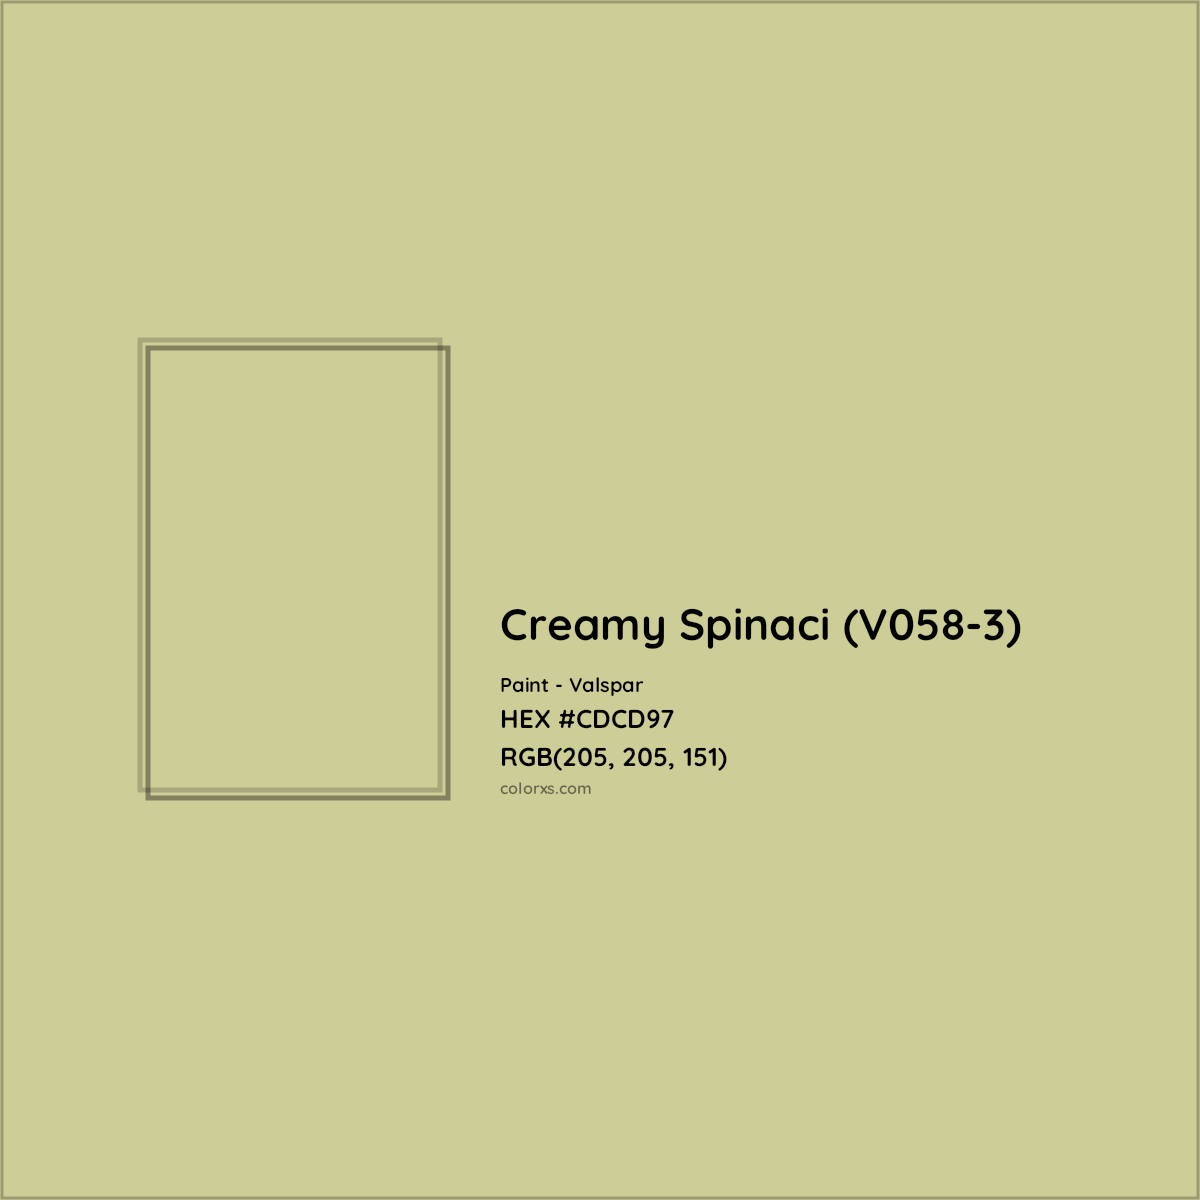 HEX #CDCD97 Creamy Spinaci (V058-3) Paint Valspar - Color Code